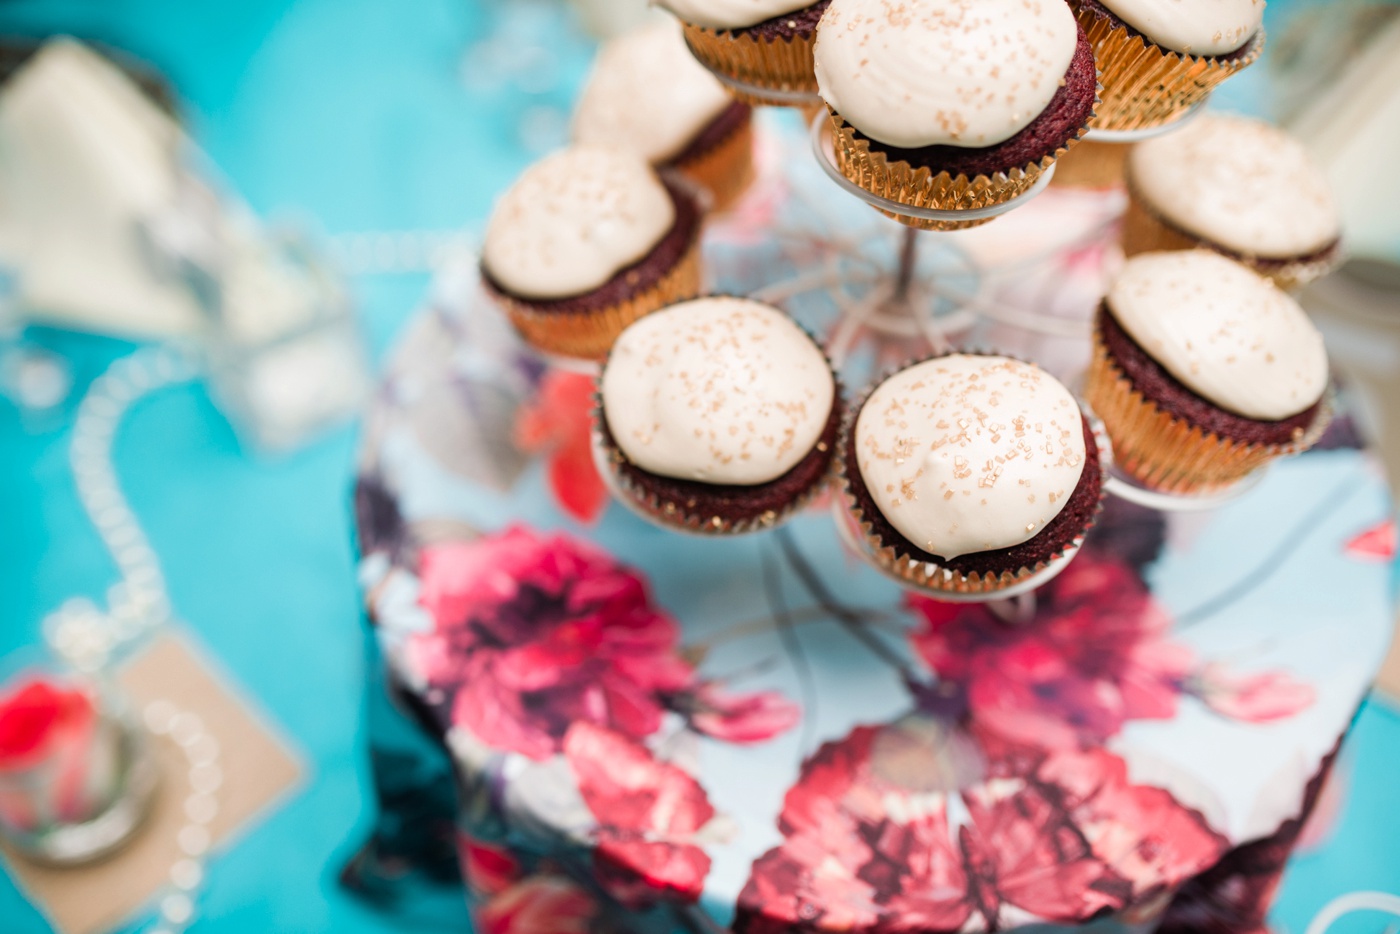 Teal Tablecloth - Cupcake Tower Wedding Centerpiece photo